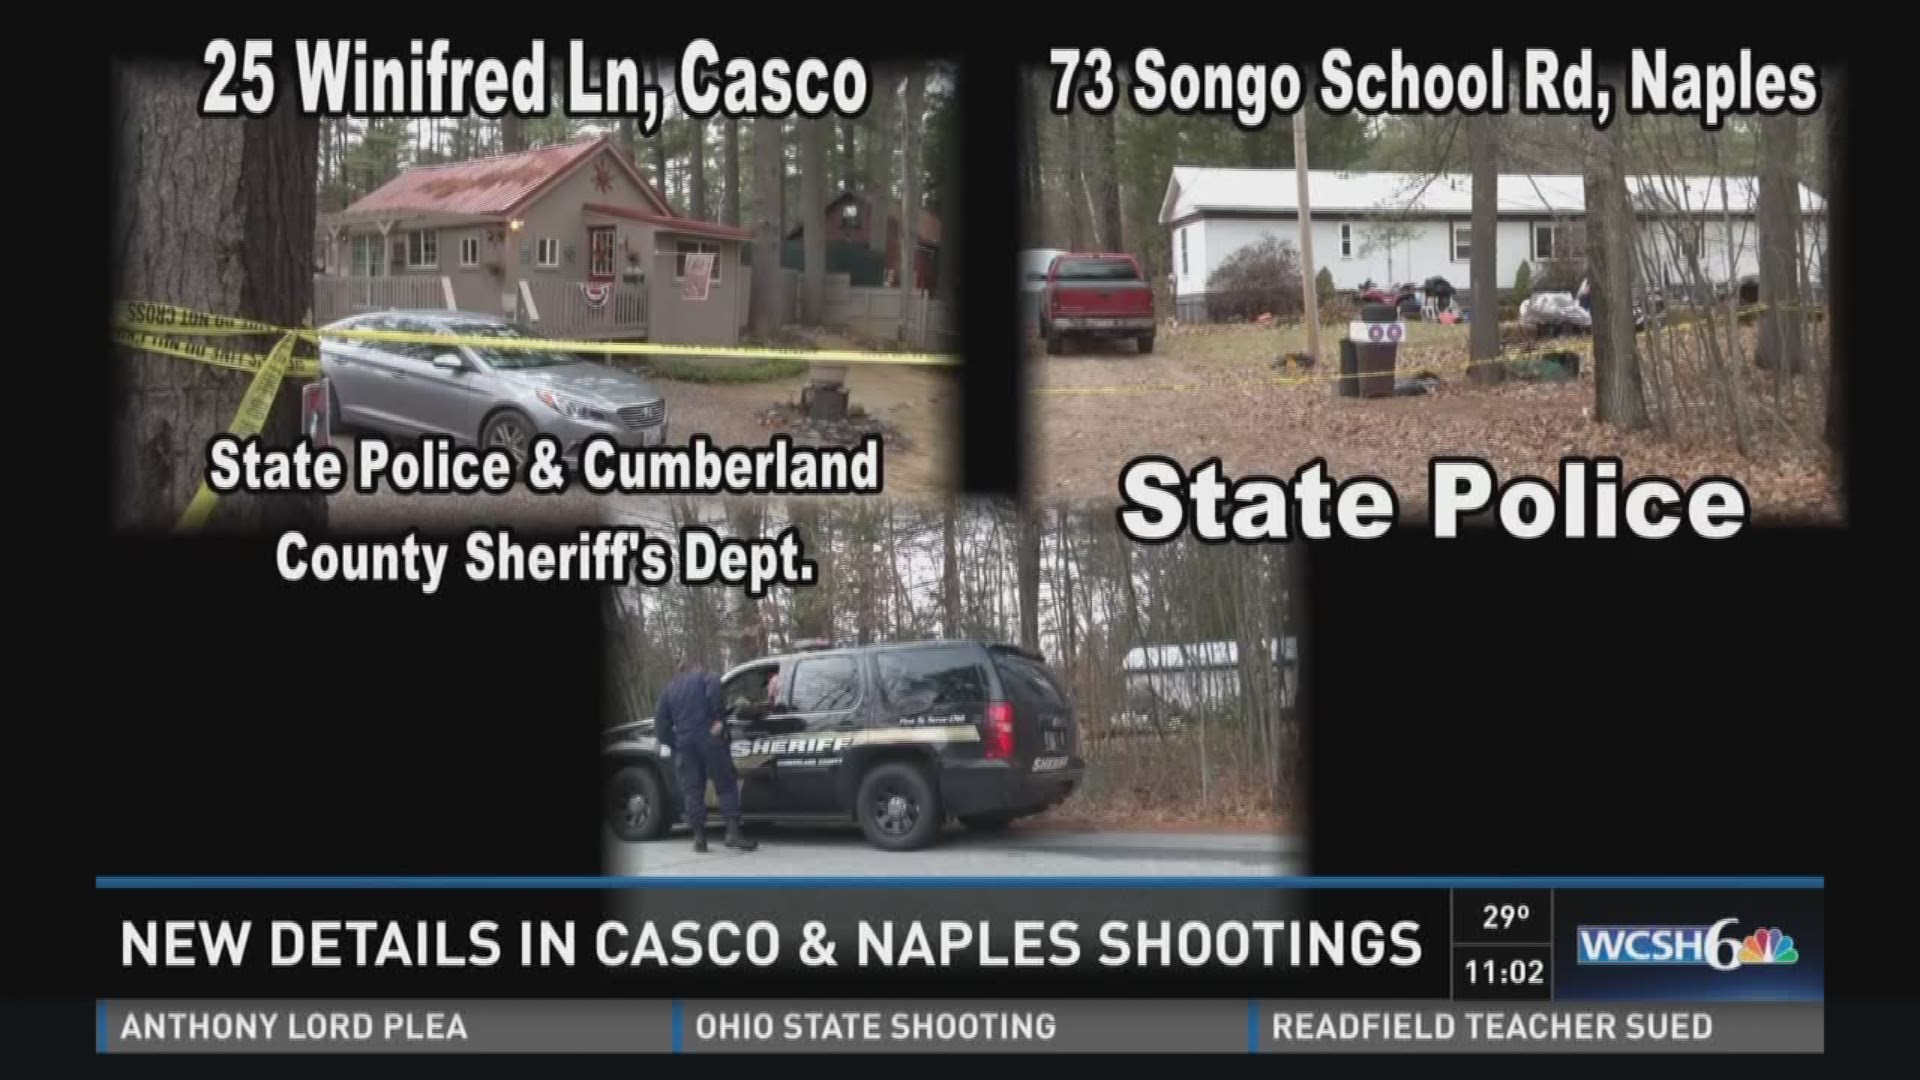 New details in Casco & Naples shootings